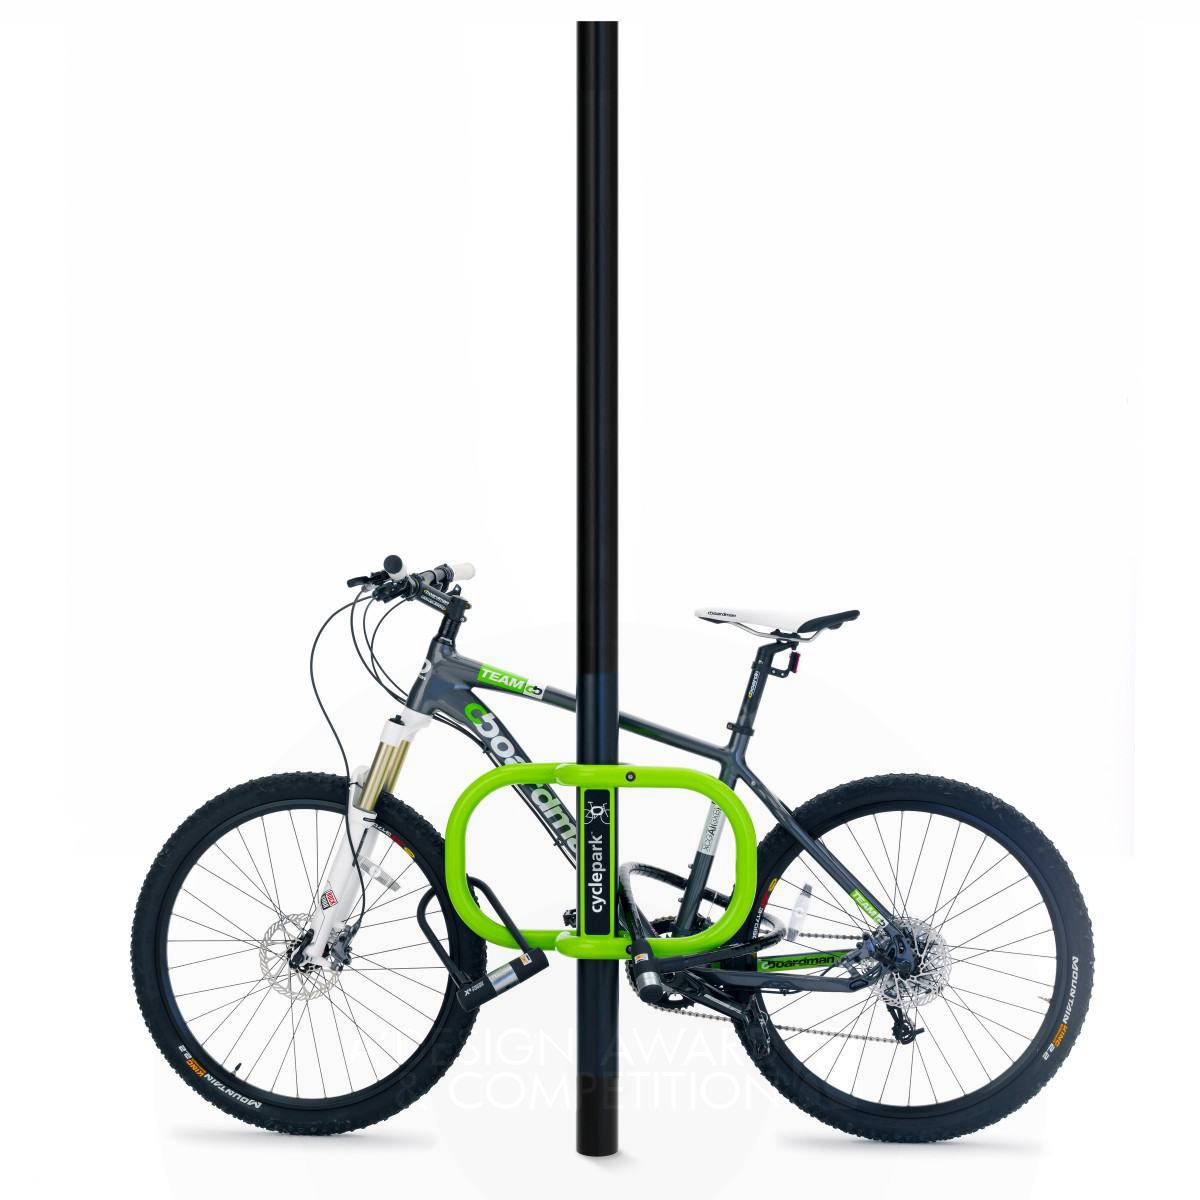 Smartstreets-Cyclepark™ Transformational bike parking by Chris Garcin and Andrew Farish (Team) Platinum Street Furniture Design Award Winner 2014 